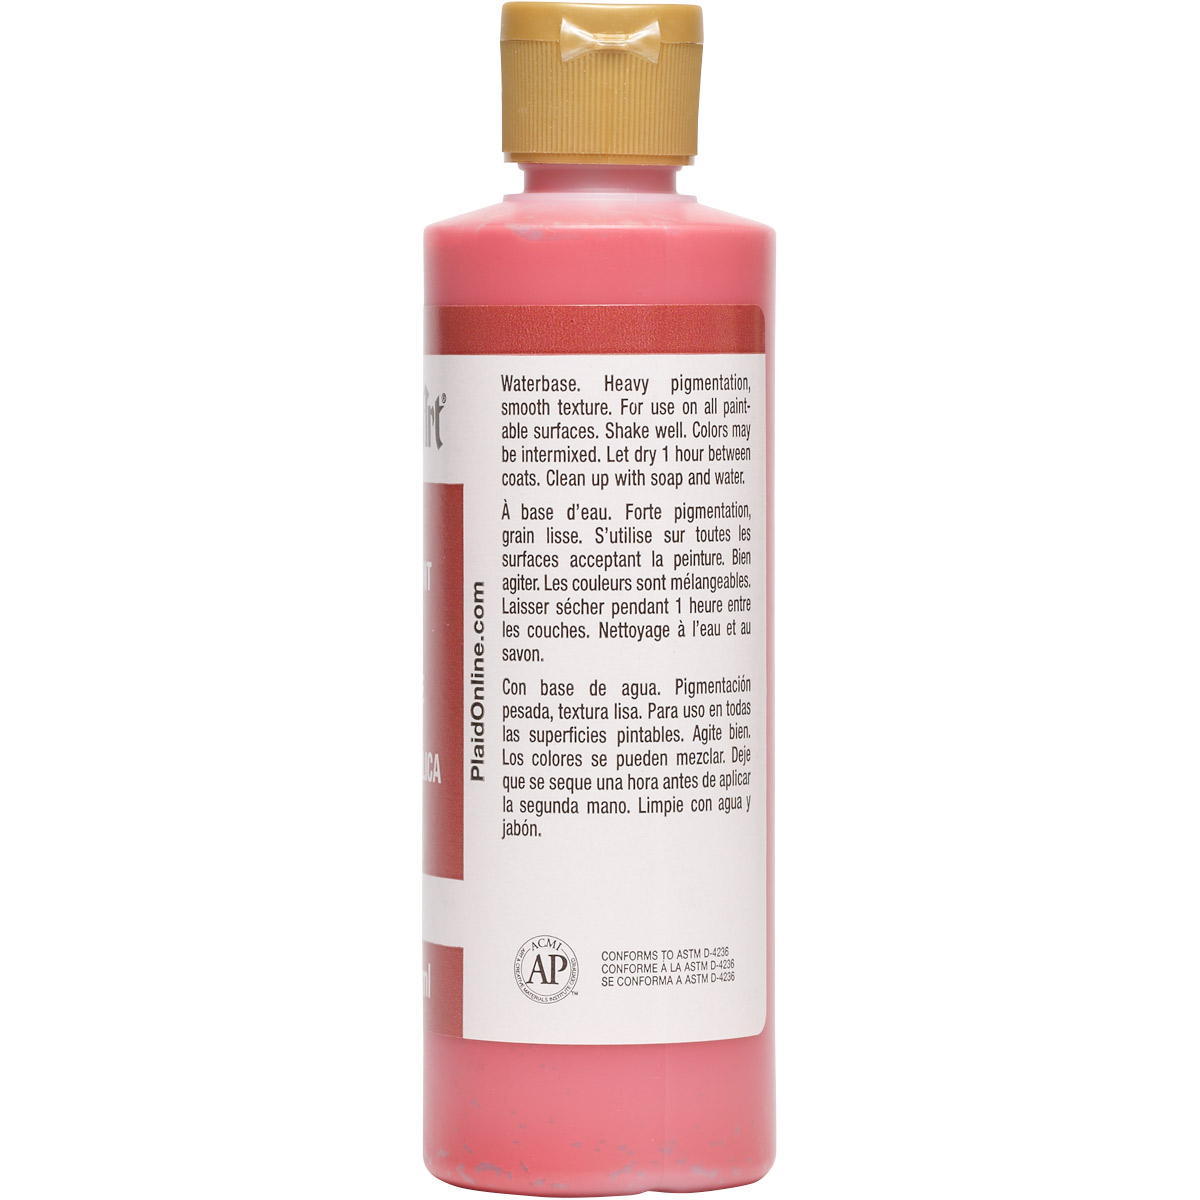 FolkArt ® Acrylic Colors - Lipstick Red, 8 oz. - 824